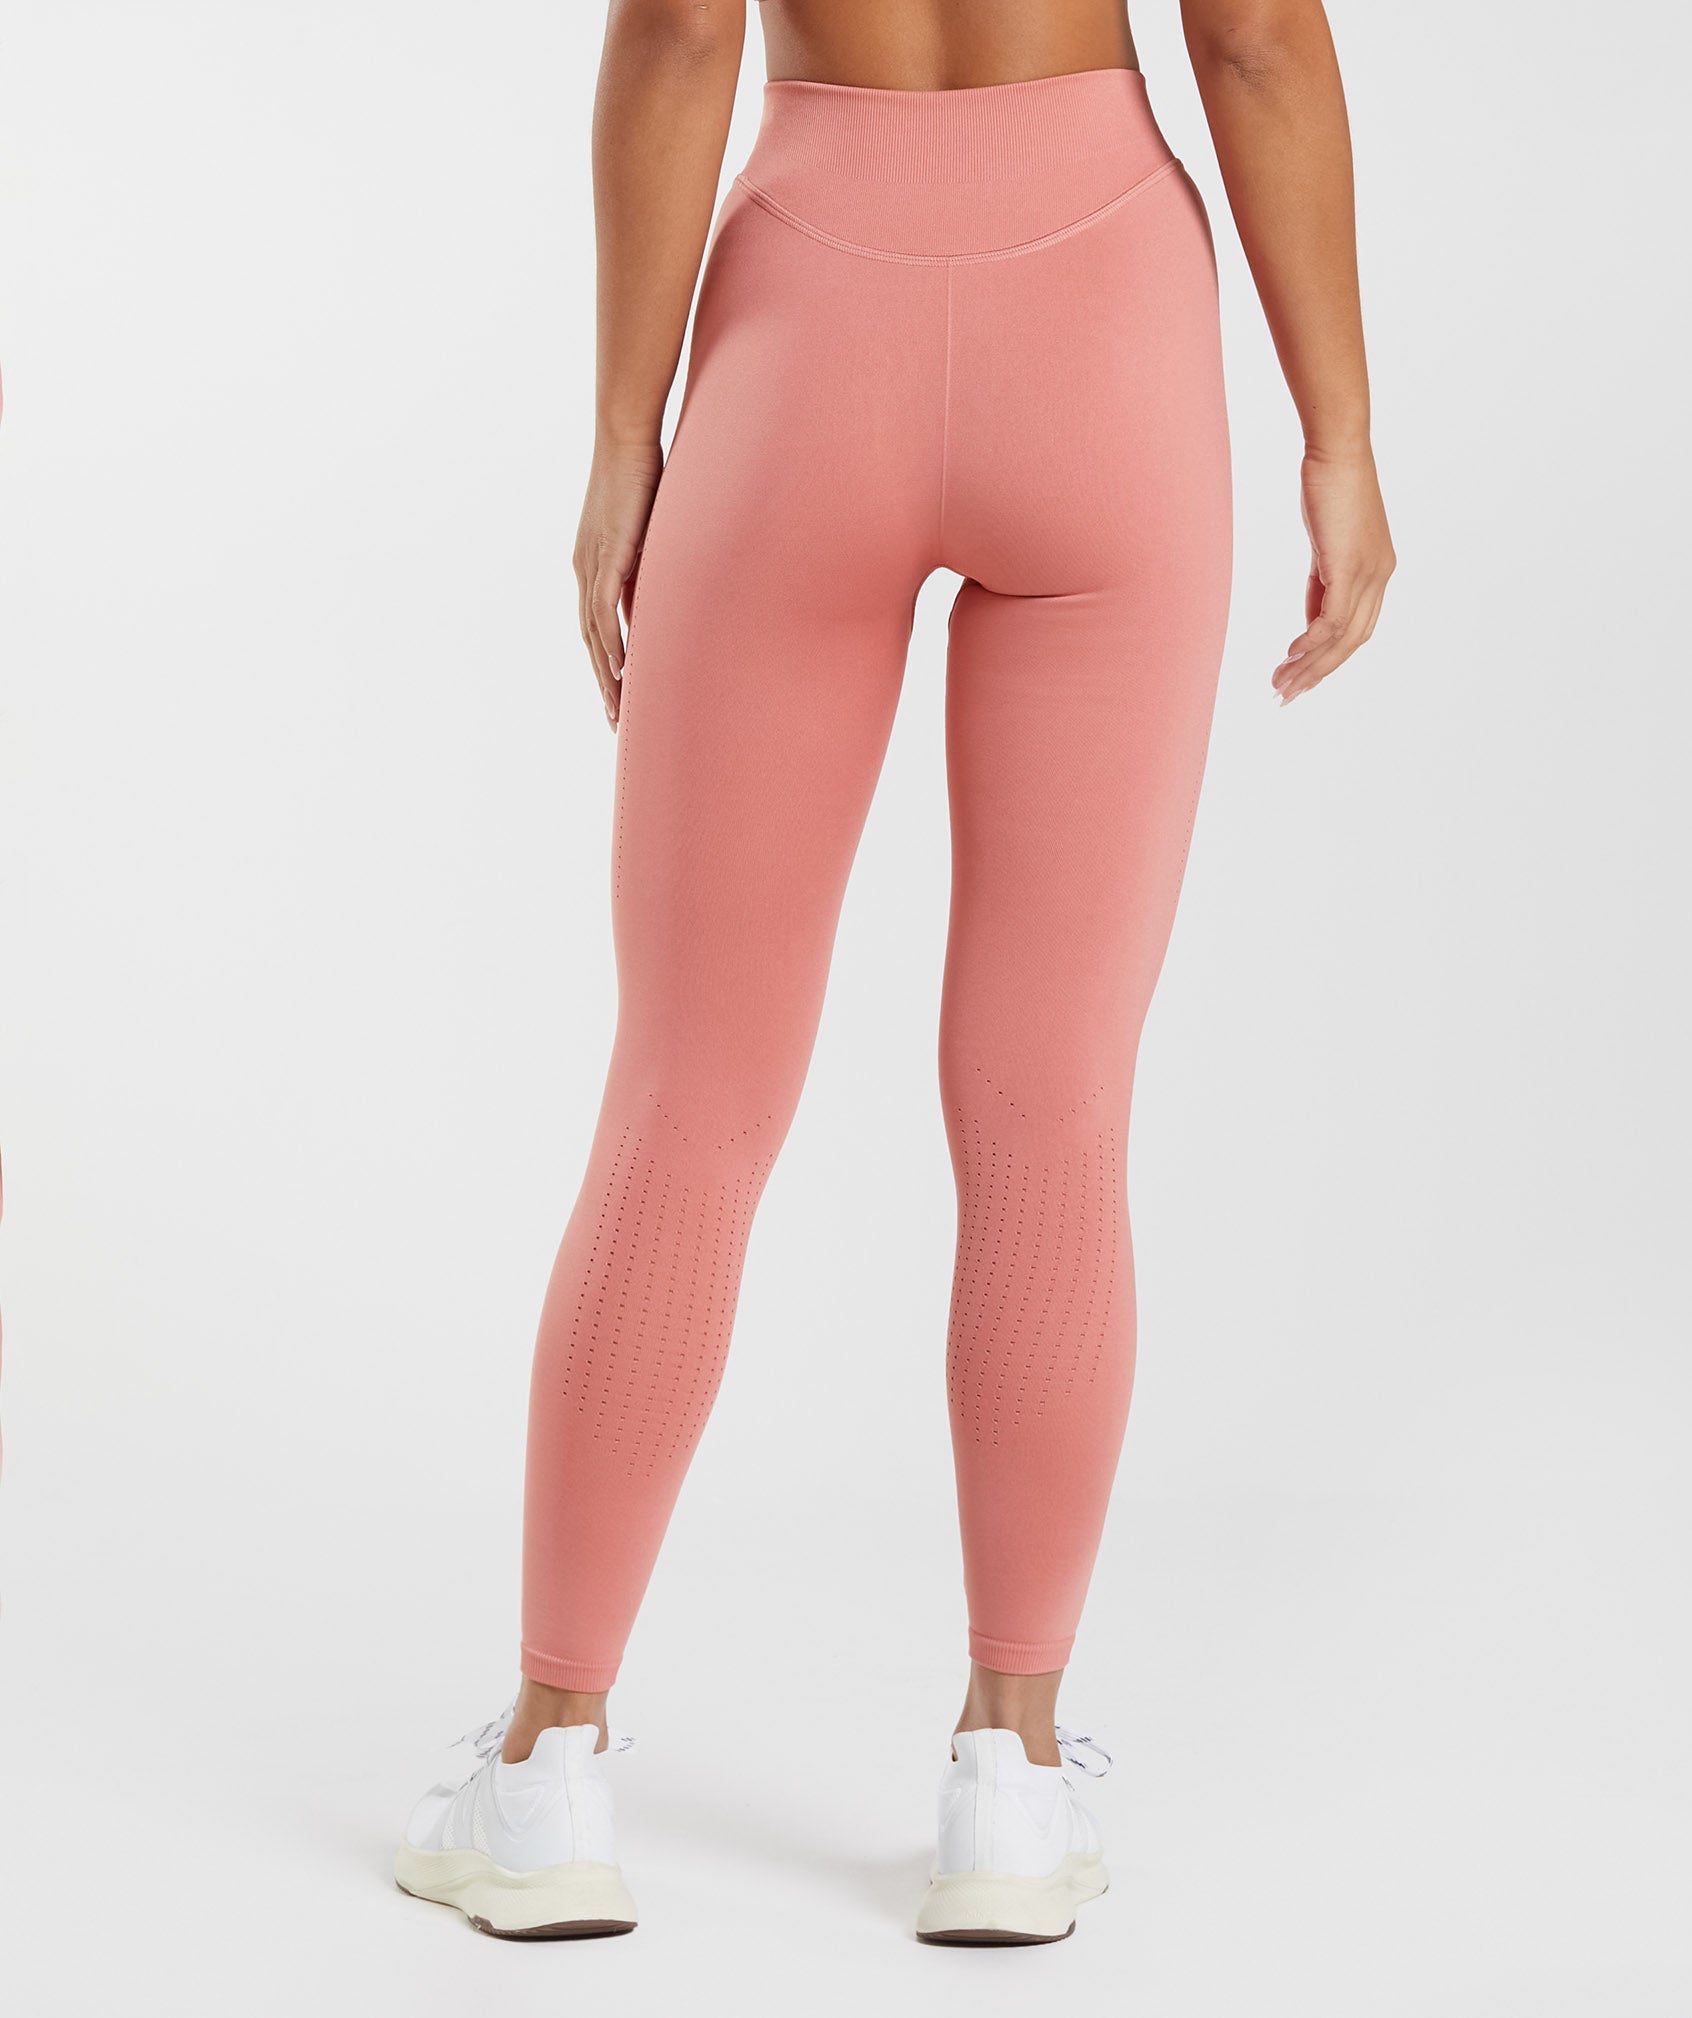 gymshark - wtflex seamless high waisted leggings chevron pink